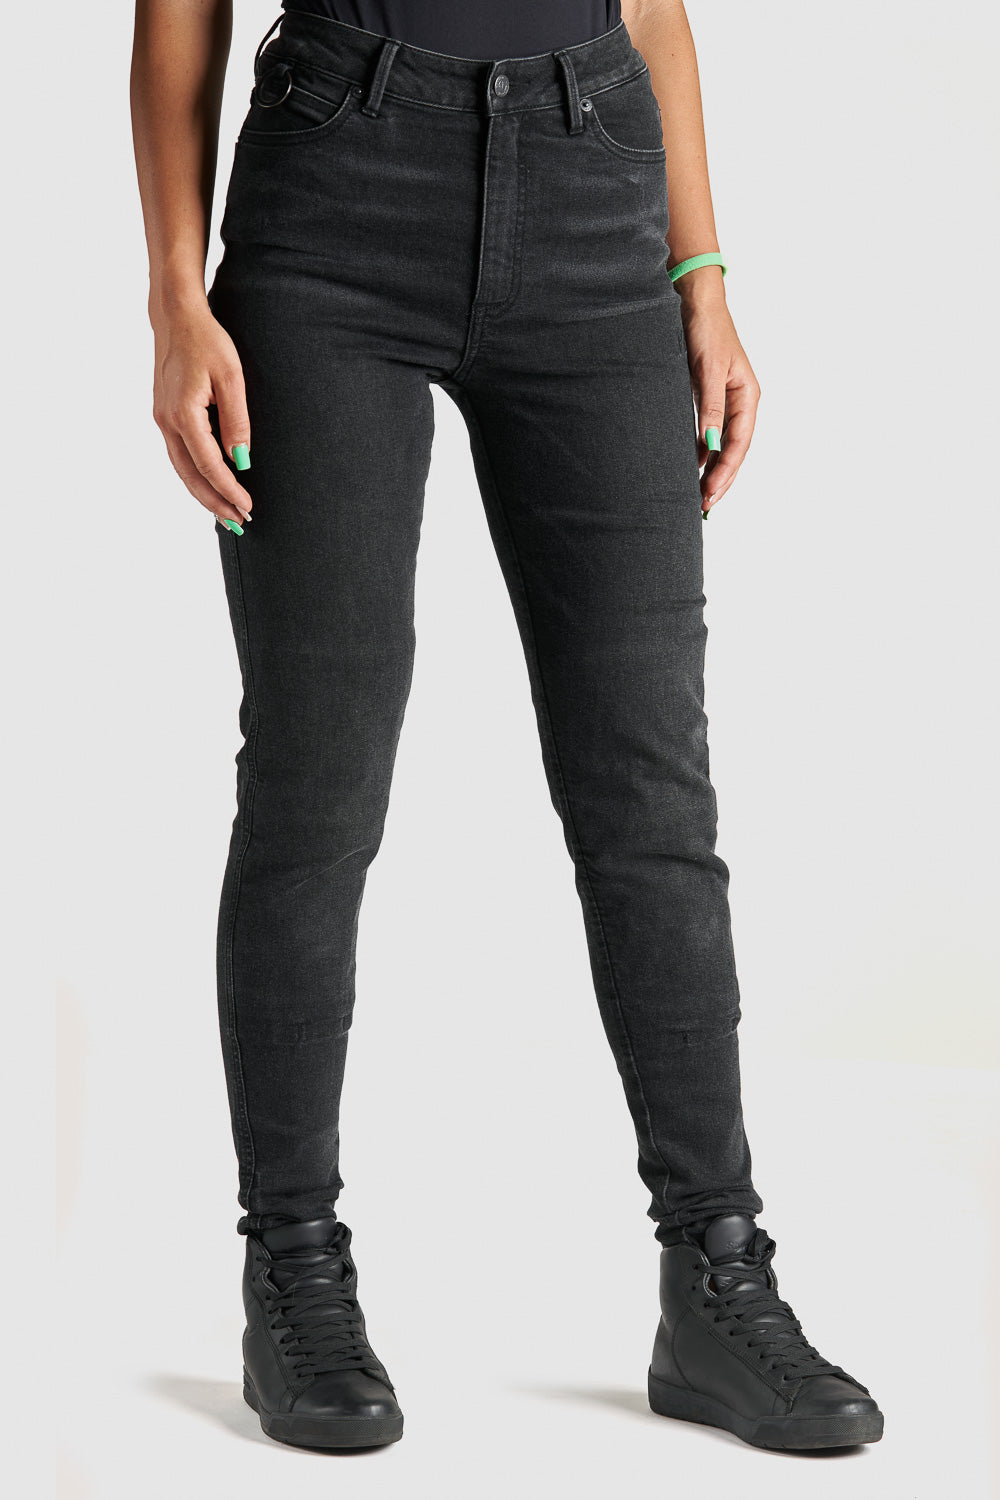 woman&#39;s legs wearing black high waist motorcycle jeans